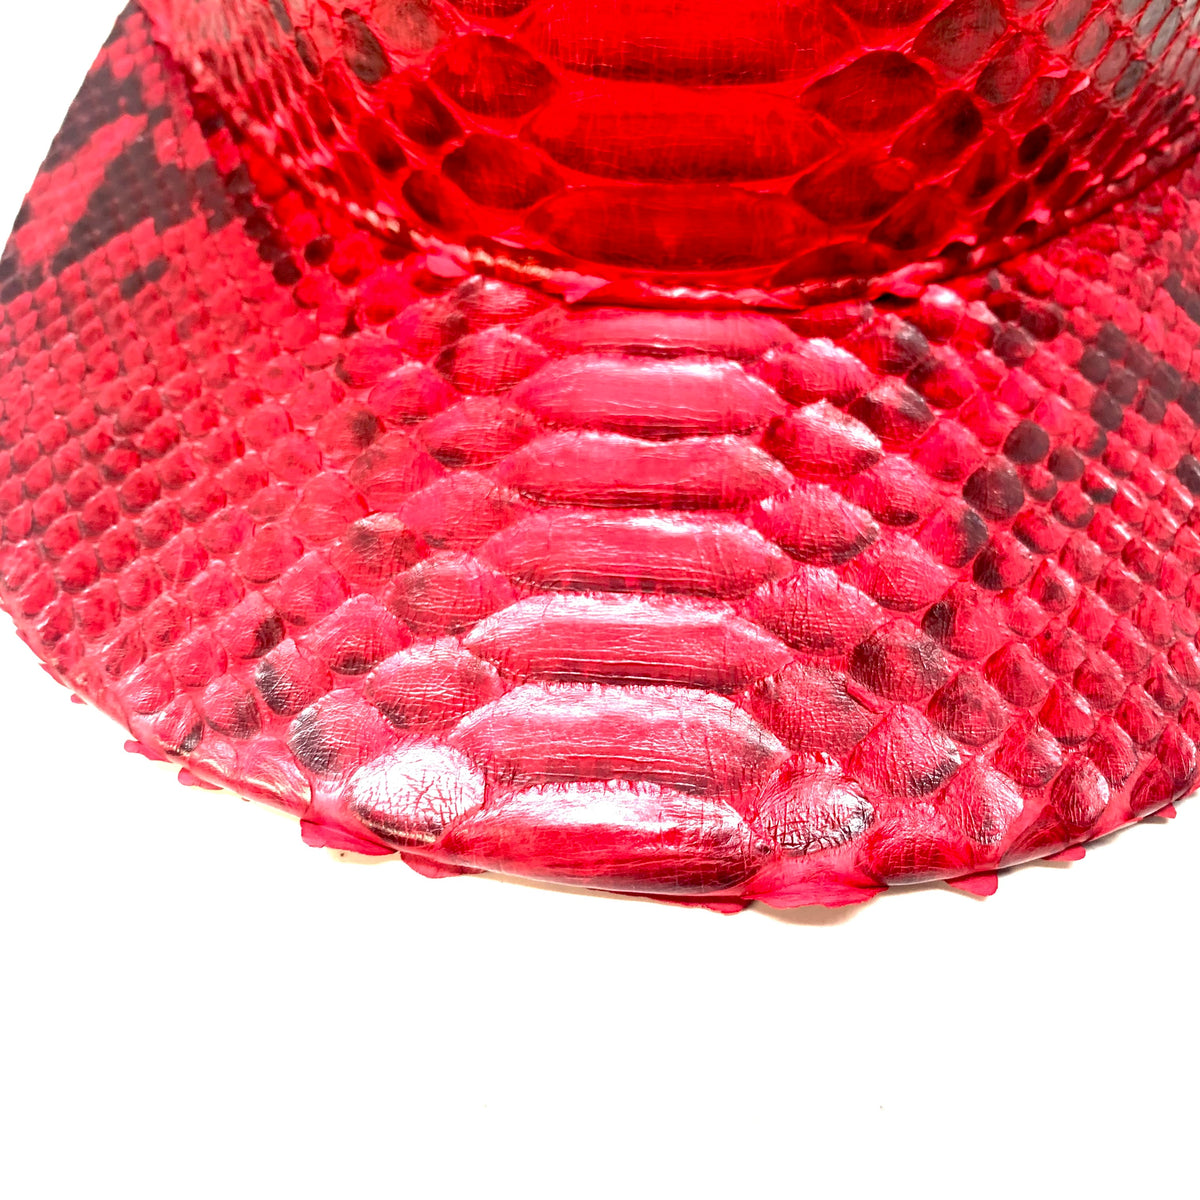 Barya NewYork All-Over Red Python Strap-Back Hat - Dudes Boutique